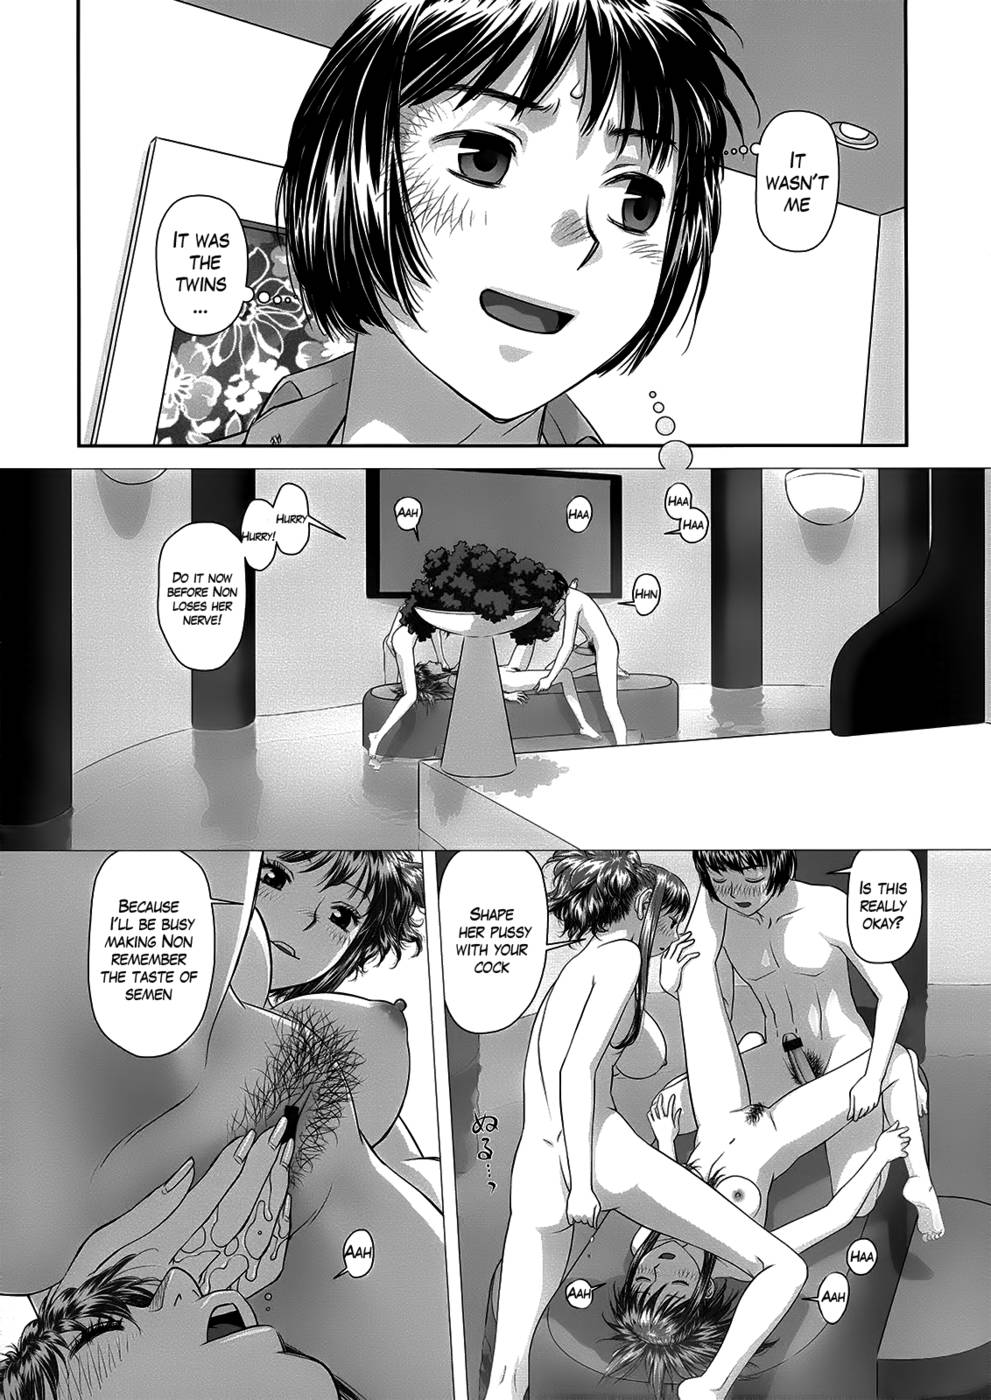 Hentai Manga Comic-Ruri Ruri-Chapter 12-End-The Circumstances Of The Twins- In The Case Of Keisuke 3-2